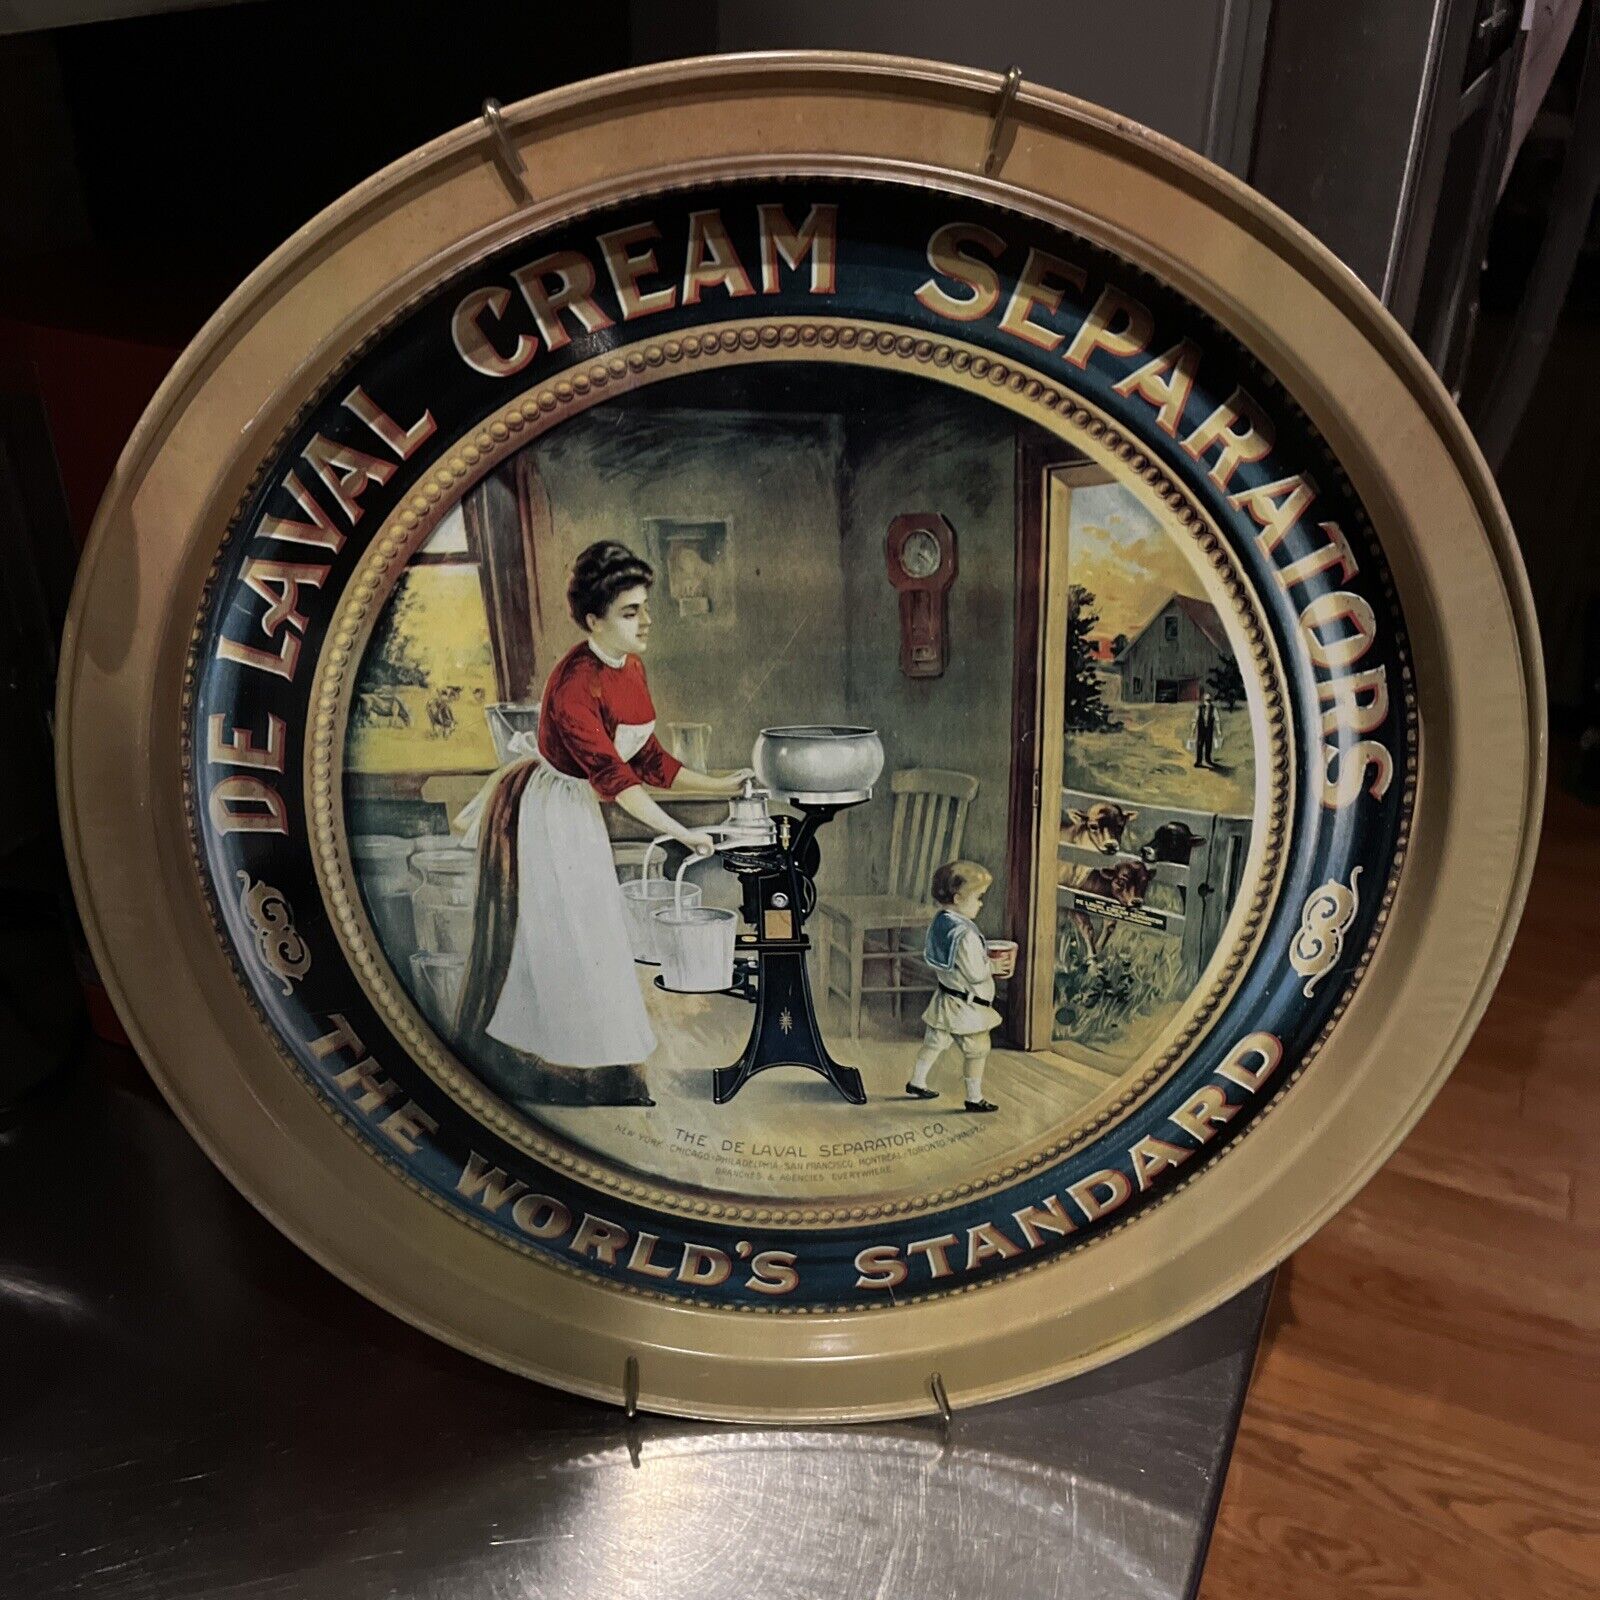 Vintage 1978 De Laval Co. Ltd Cream Separators Commemorative Advertising Tray